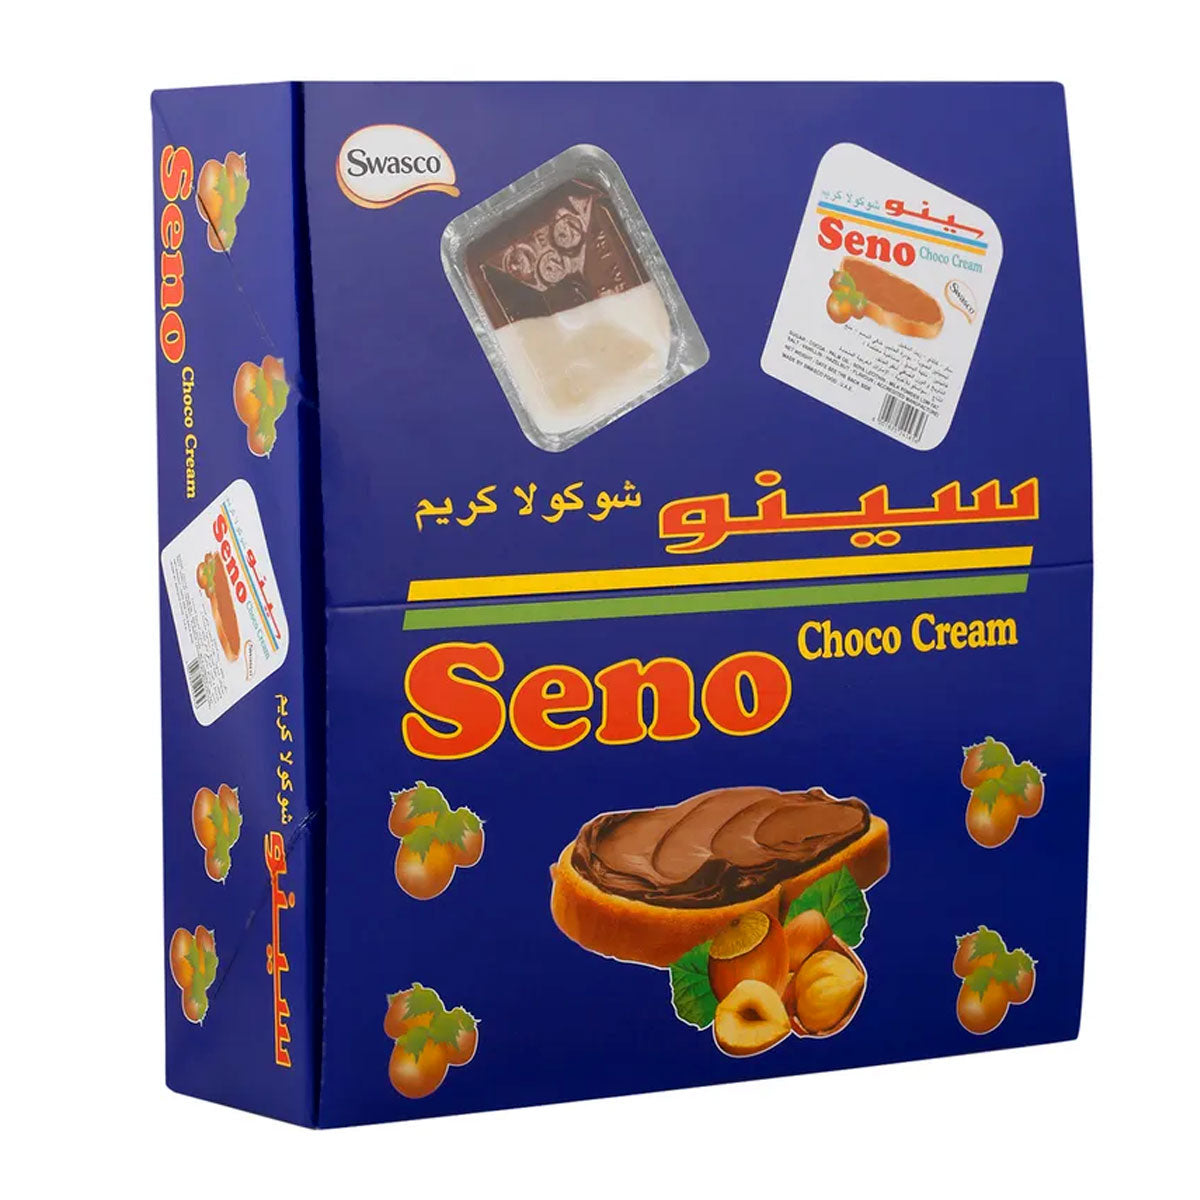 Seno Choco Cream 72 Pieces